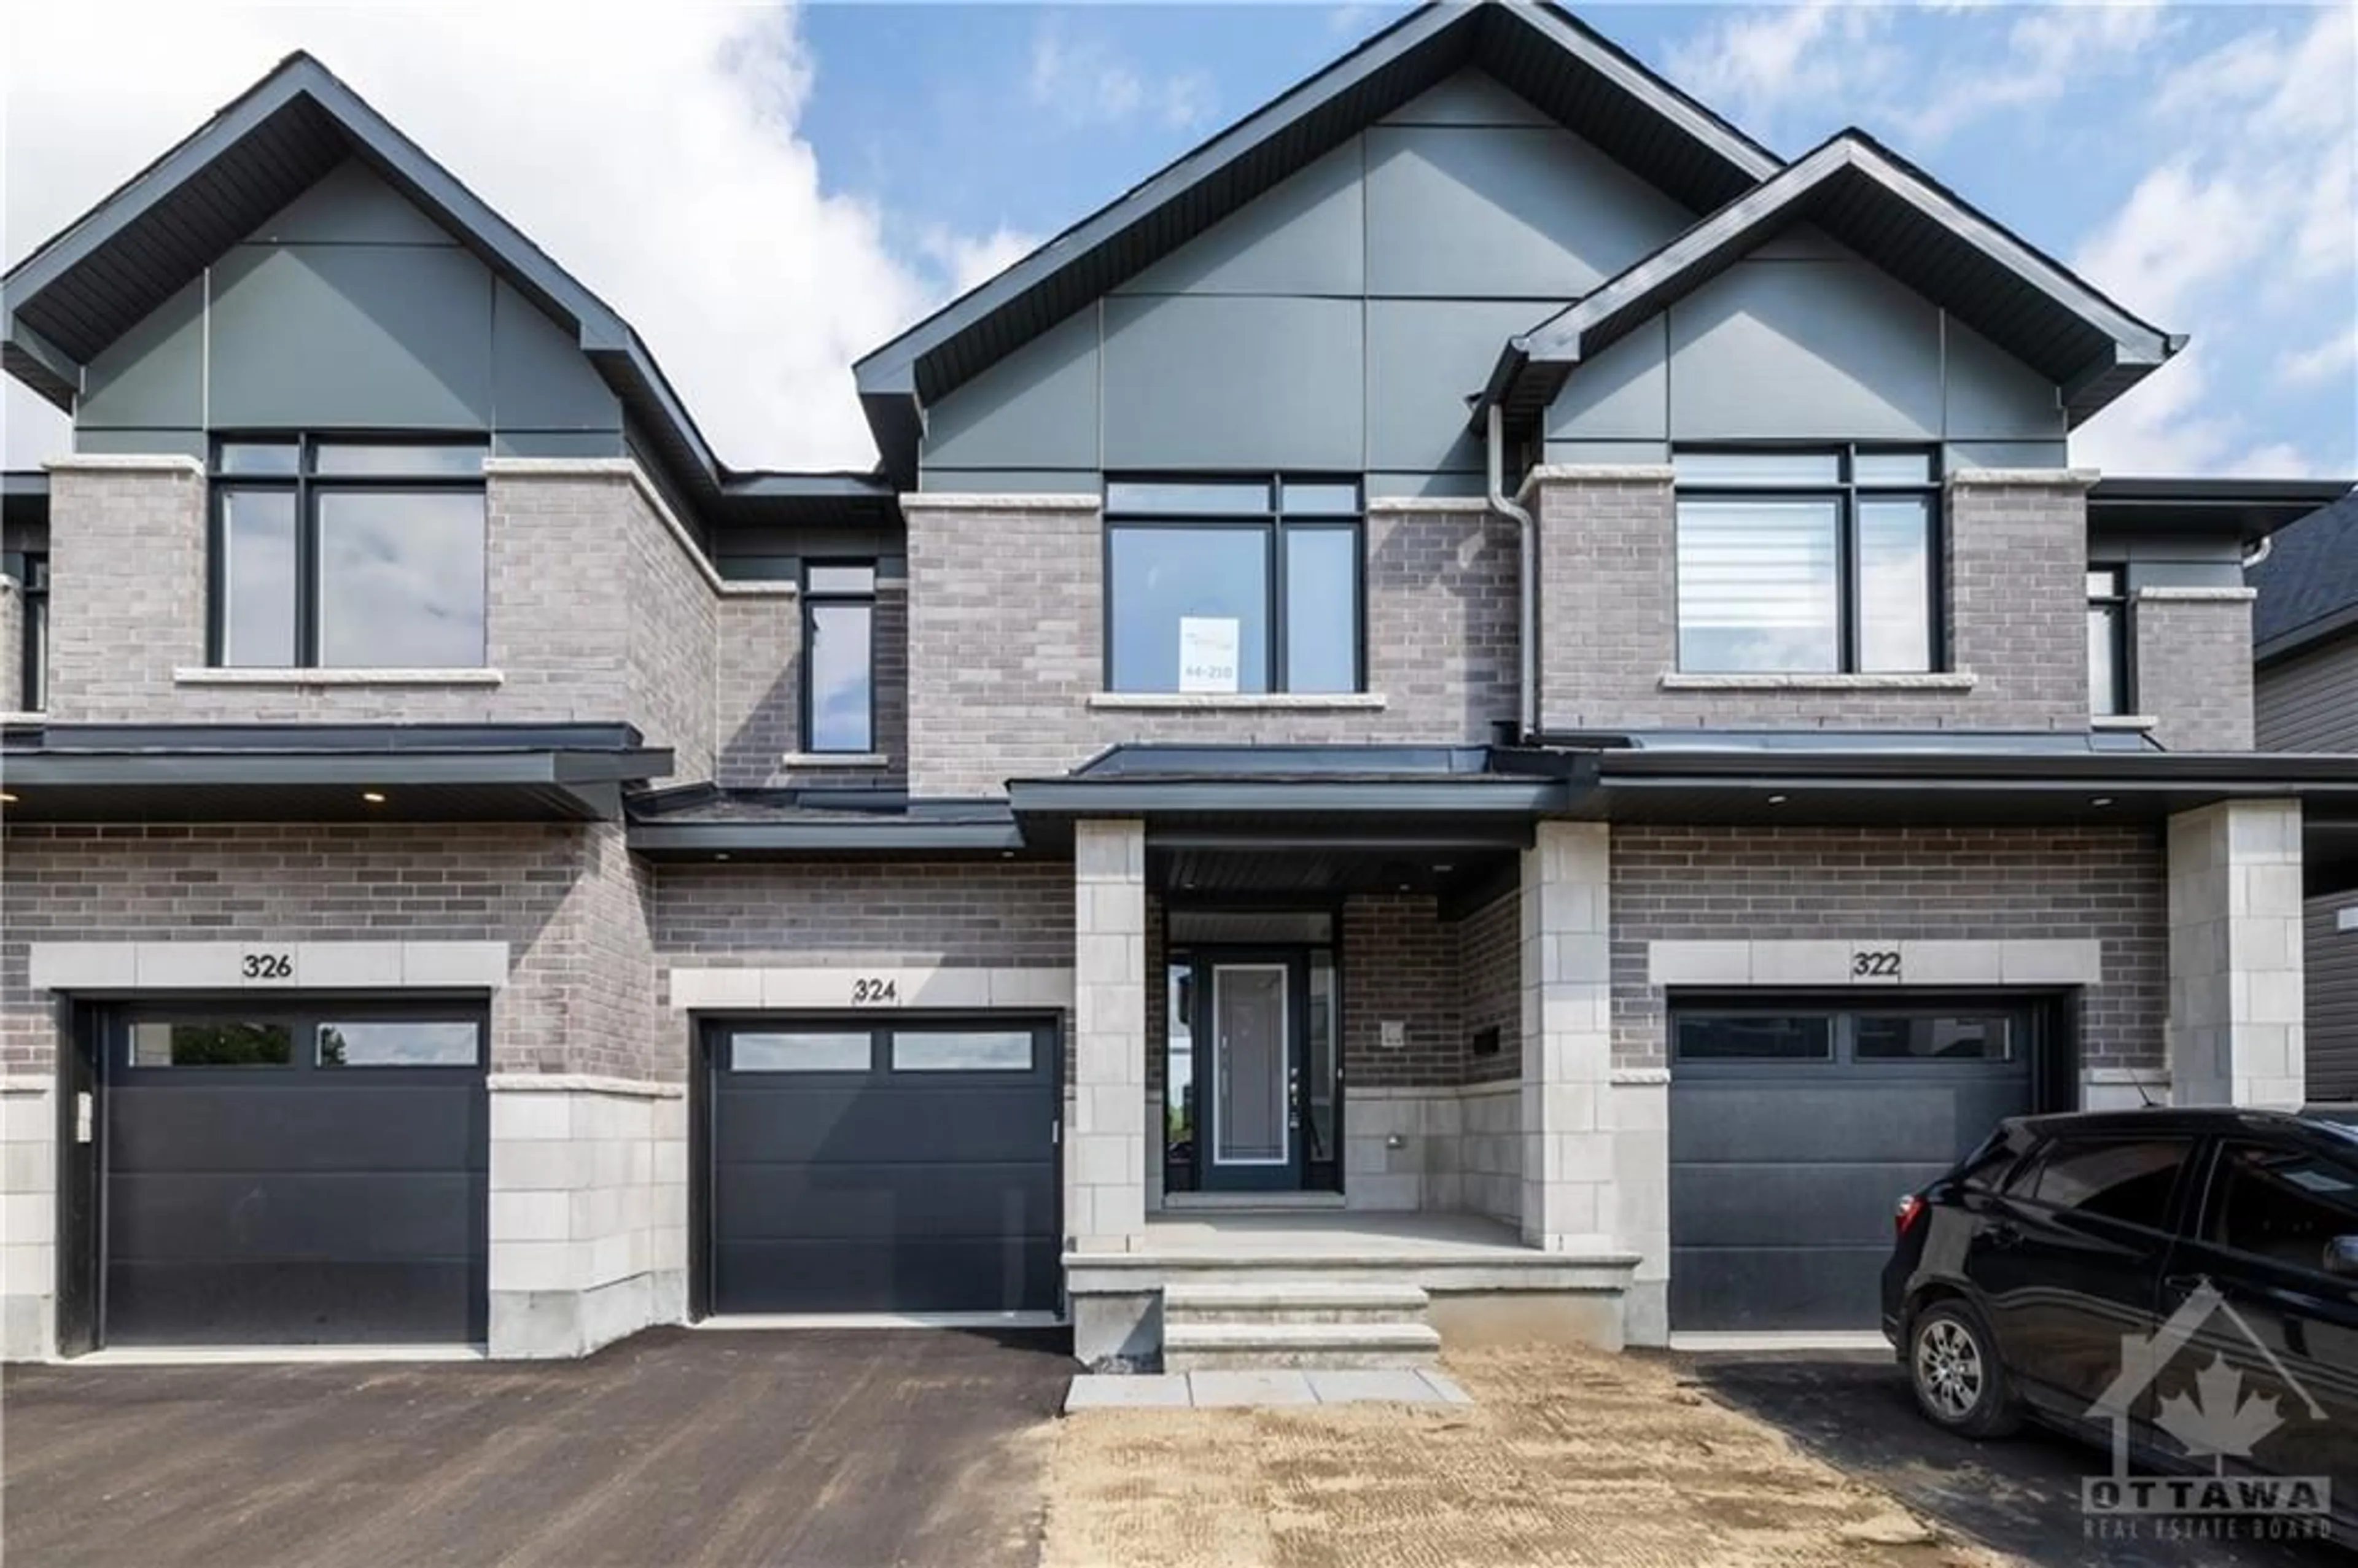 Home with brick exterior material for 324 MAKOBE Lane, Ottawa Ontario K4M 0M1